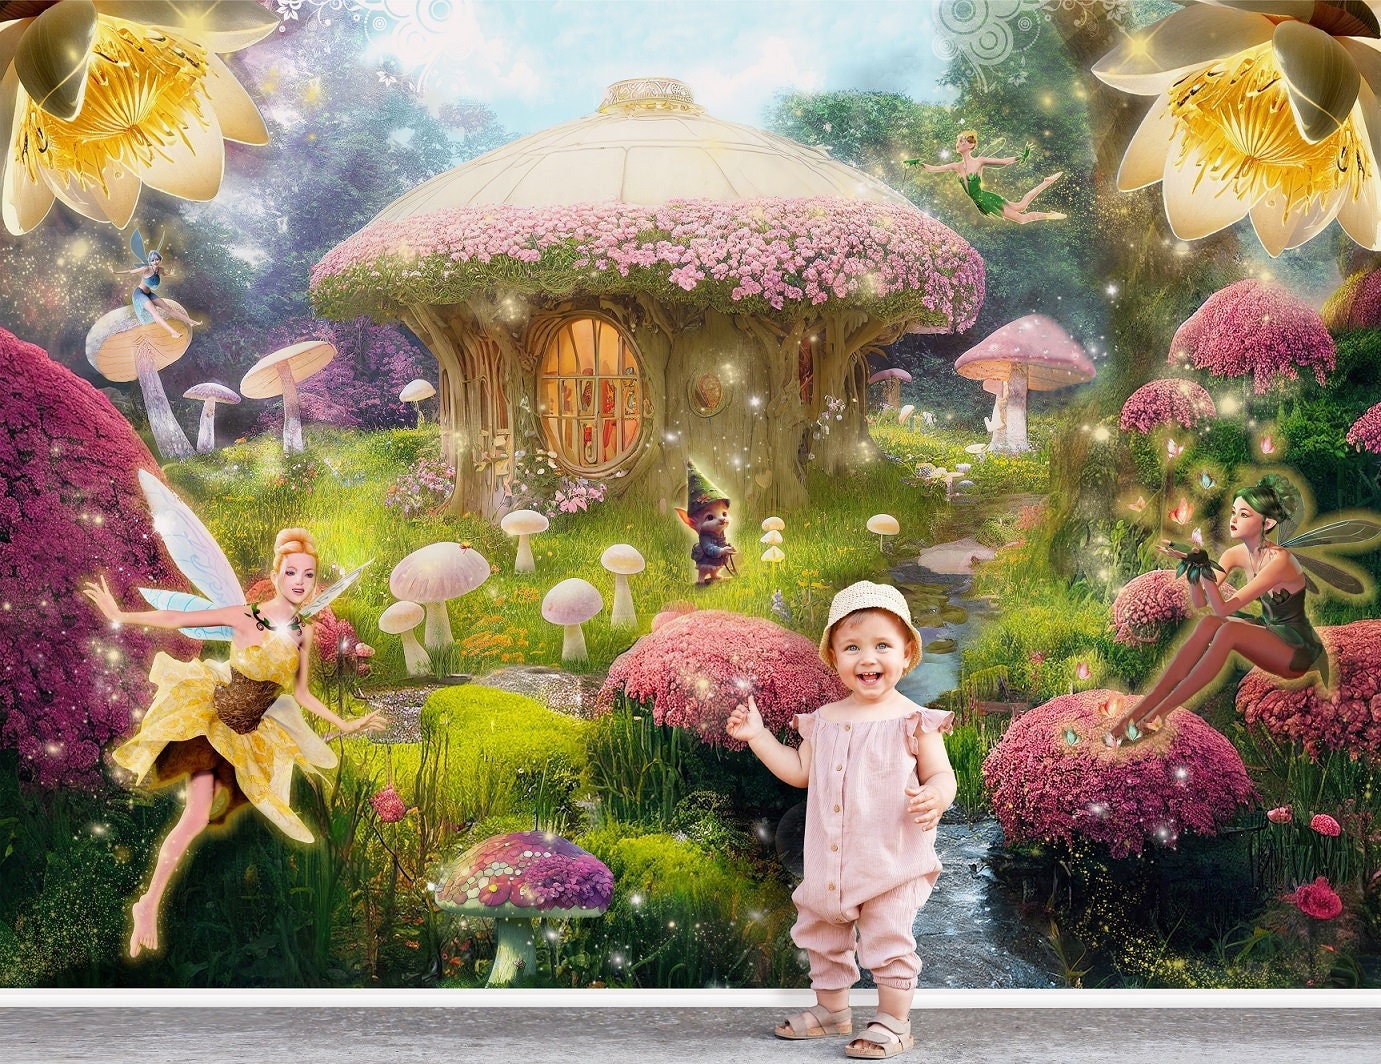 Fairy Garden by dreams2realityart on DeviantArt